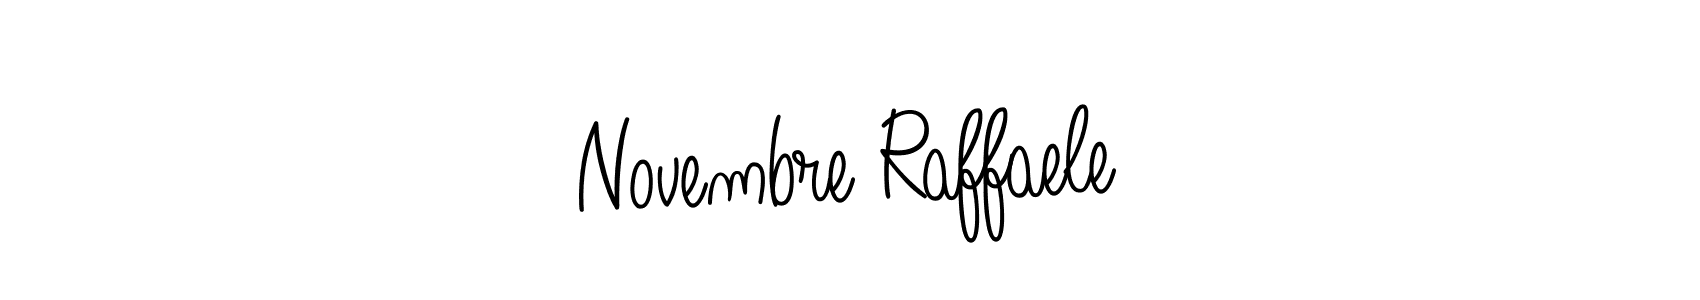 How to Draw Novembre Raffaele signature style? Angelique-Rose-font-FFP is a latest design signature styles for name Novembre Raffaele. Novembre Raffaele signature style 5 images and pictures png